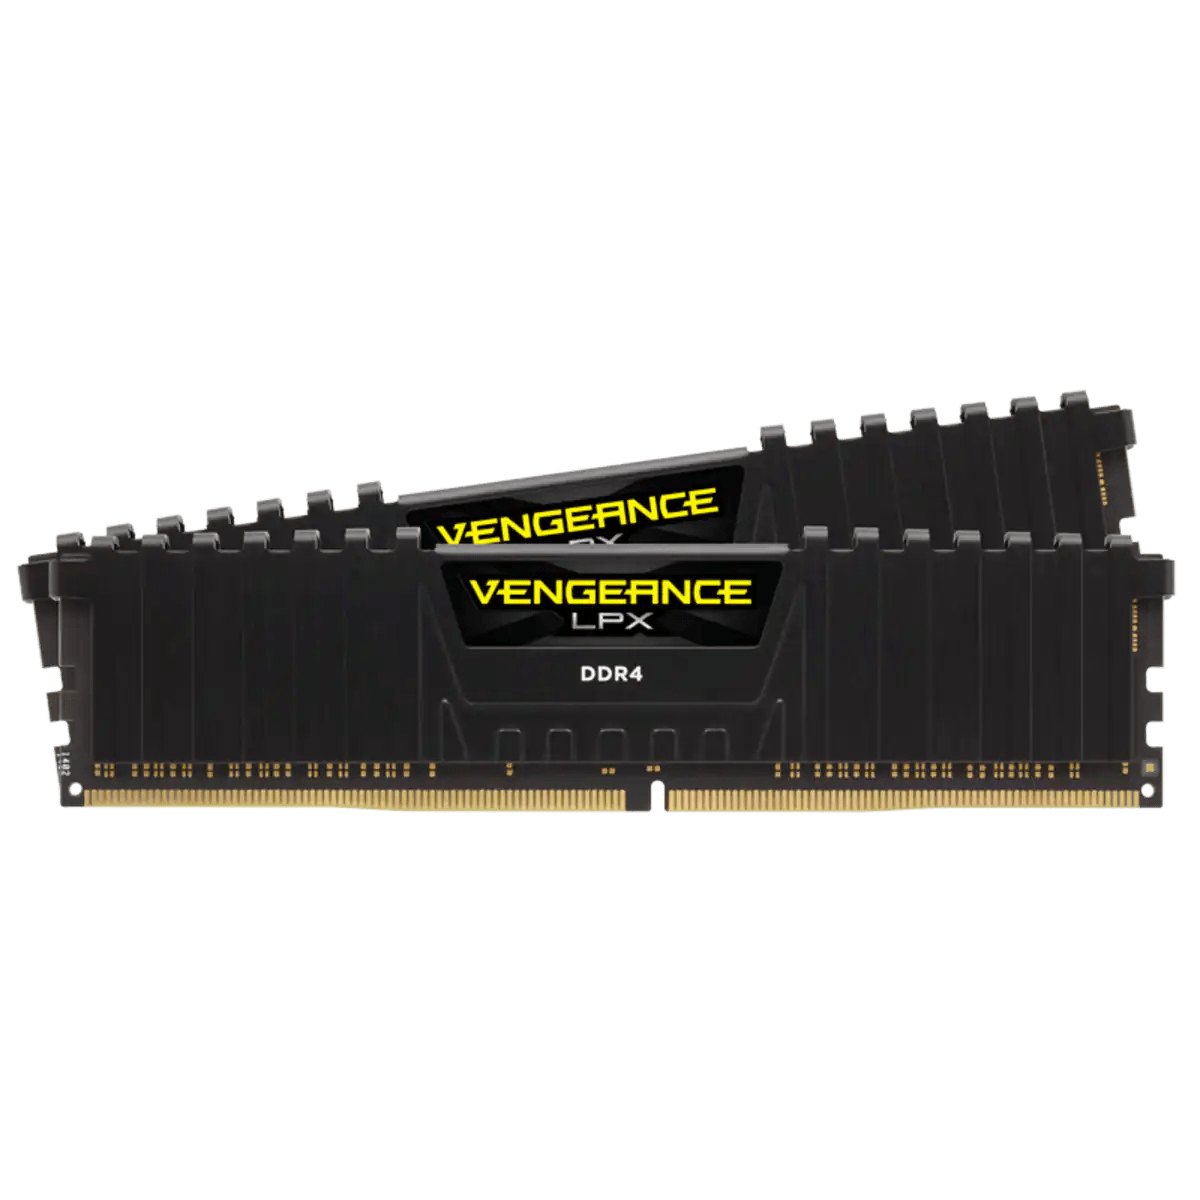 Corsair Vengeance® LPX 16GB (2 x 8GB) DDR4 DRAM 3200MHz C16 Memory Kit - Black